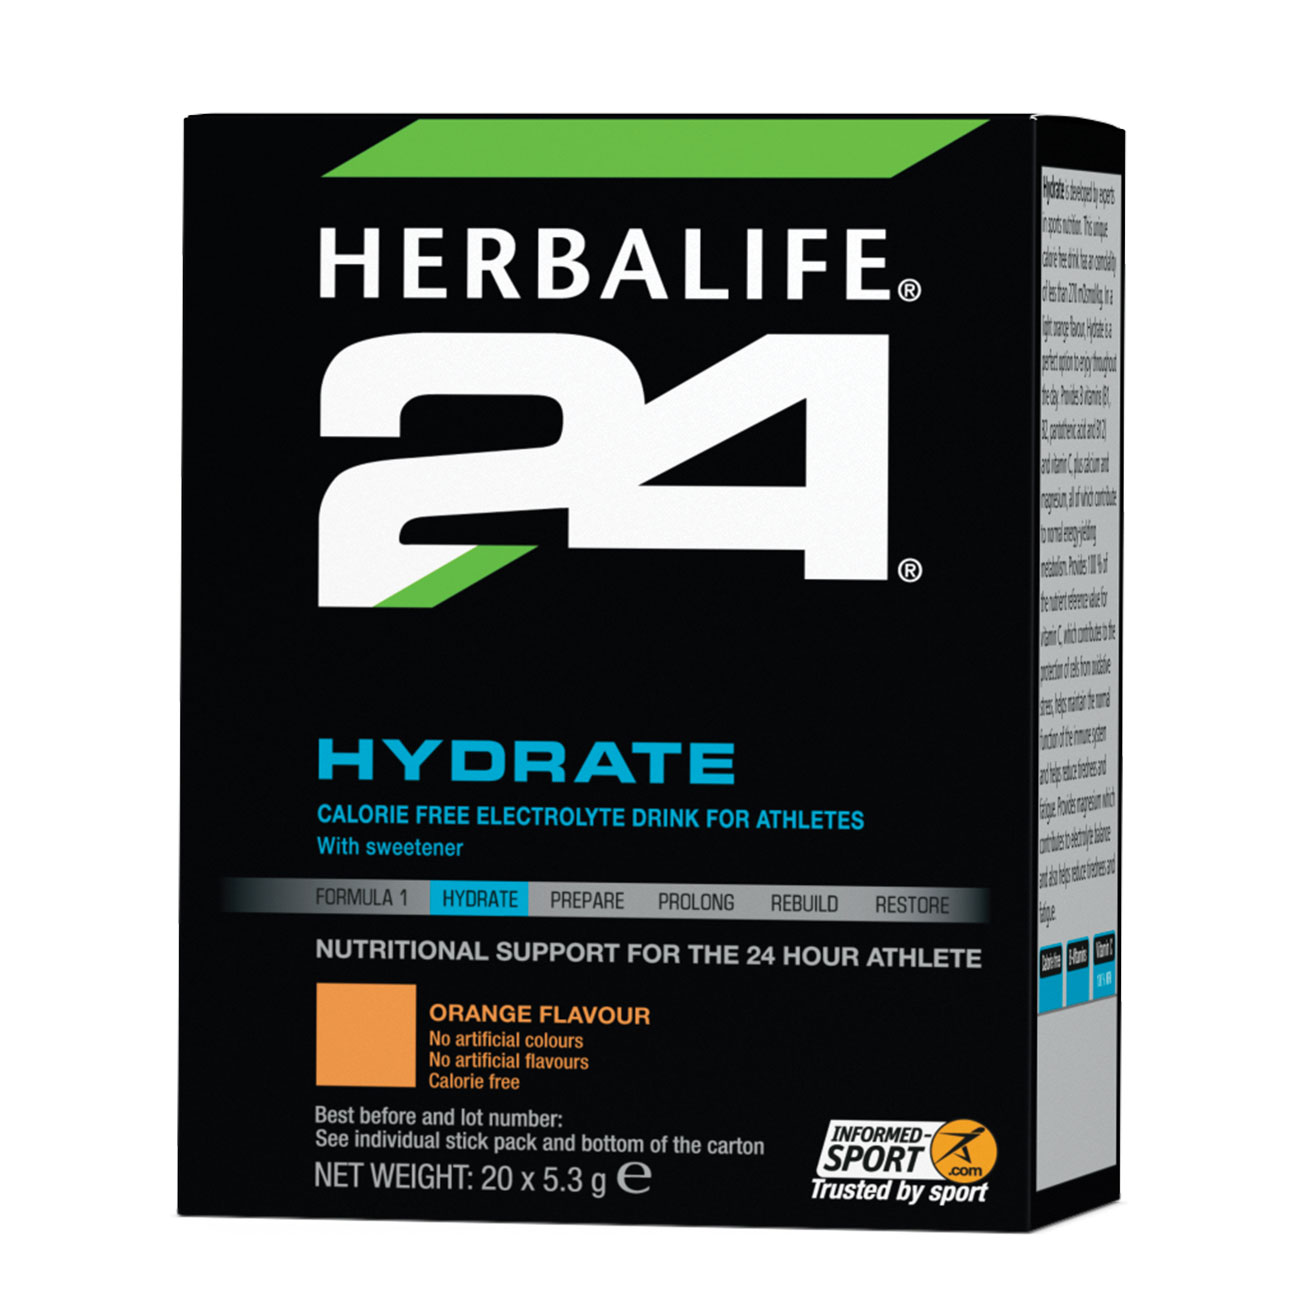 Herbalife24® Hydrate Electrolyte Drink Orange product shot